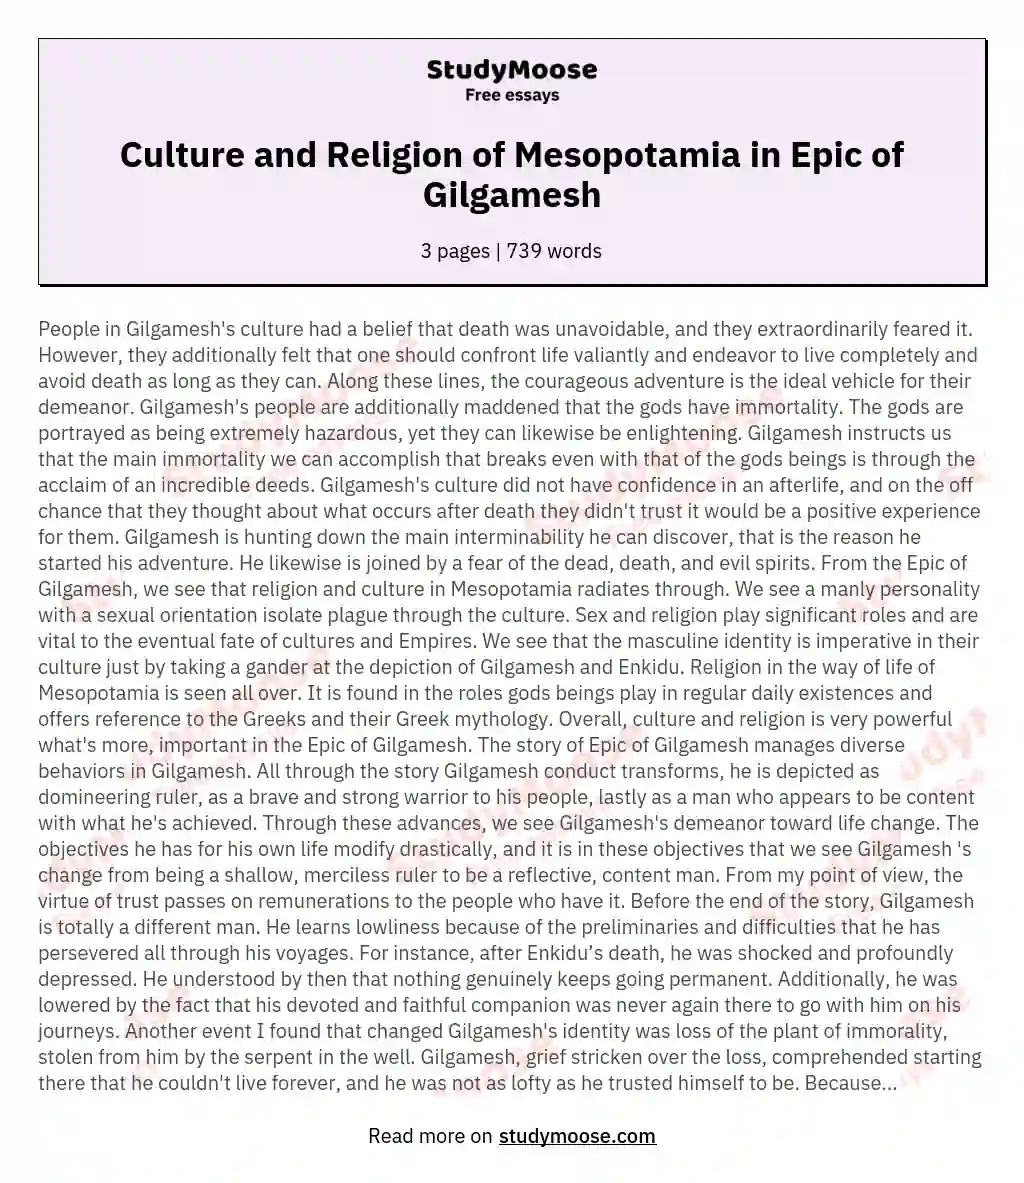 Culture and Religion of Mesopotamia in Epic of Gilgamesh essay